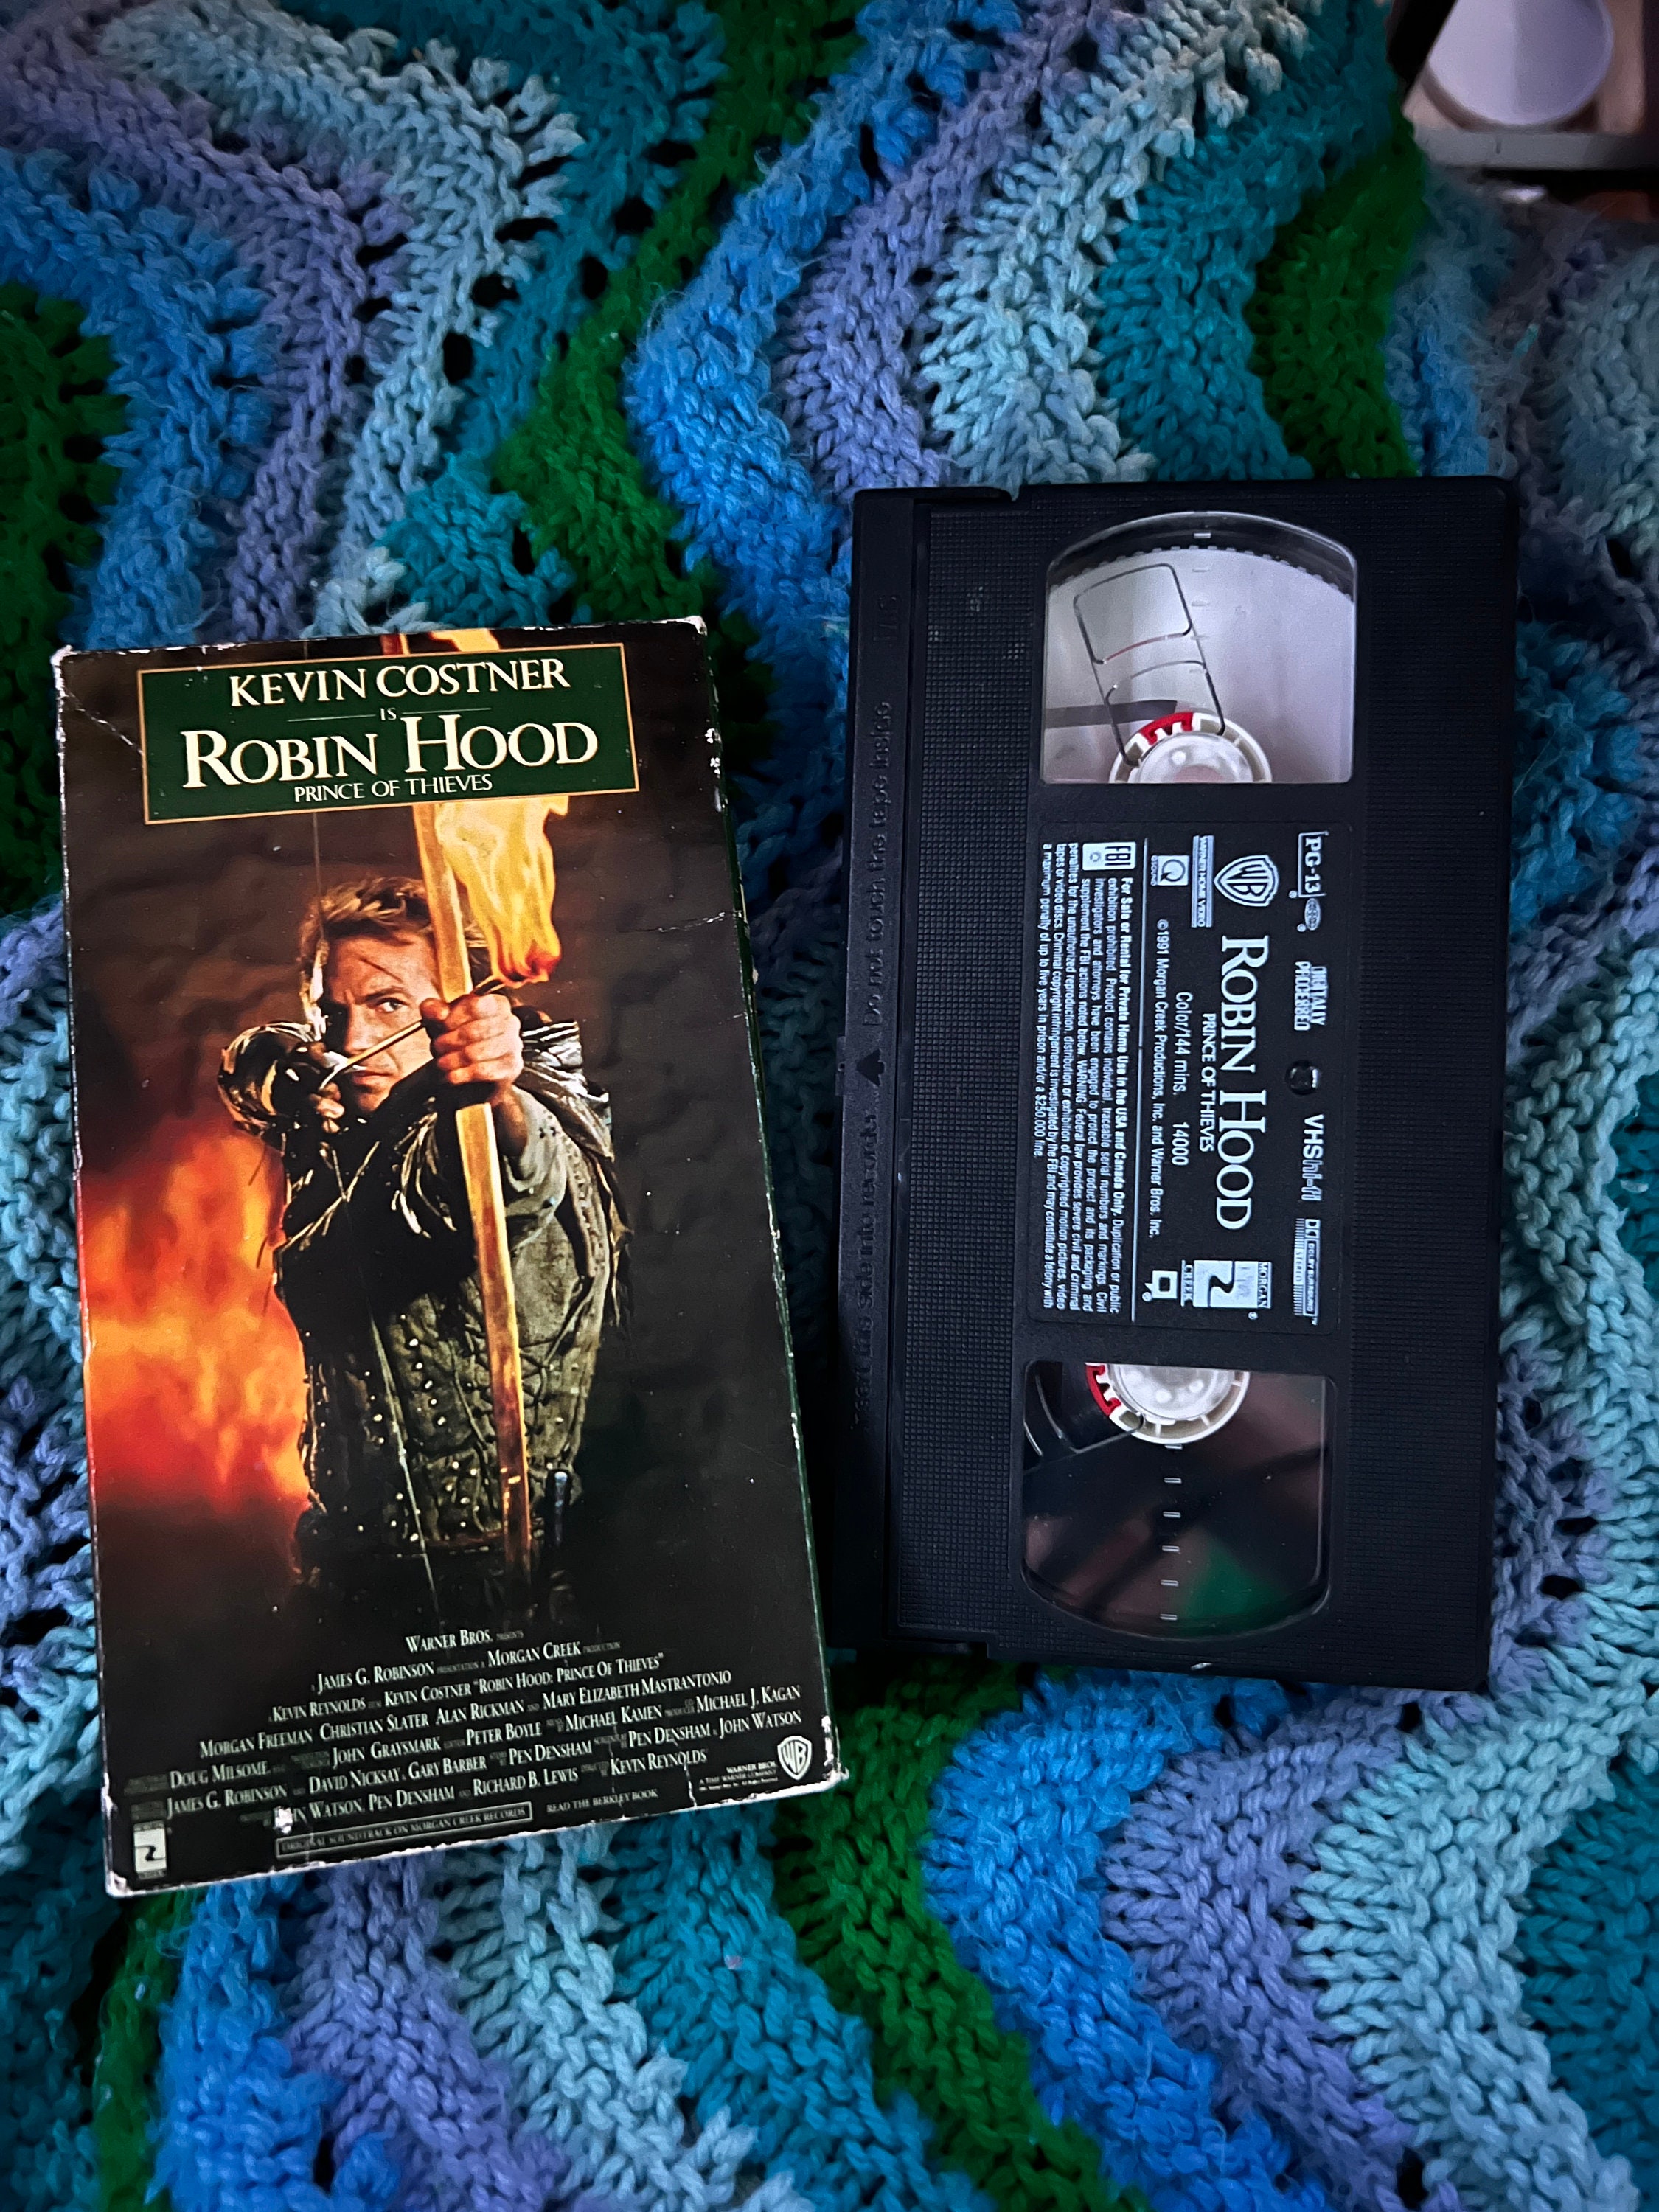 Kevin Costner Hand Signed VHS Cover - Rare Movie Memorabilia